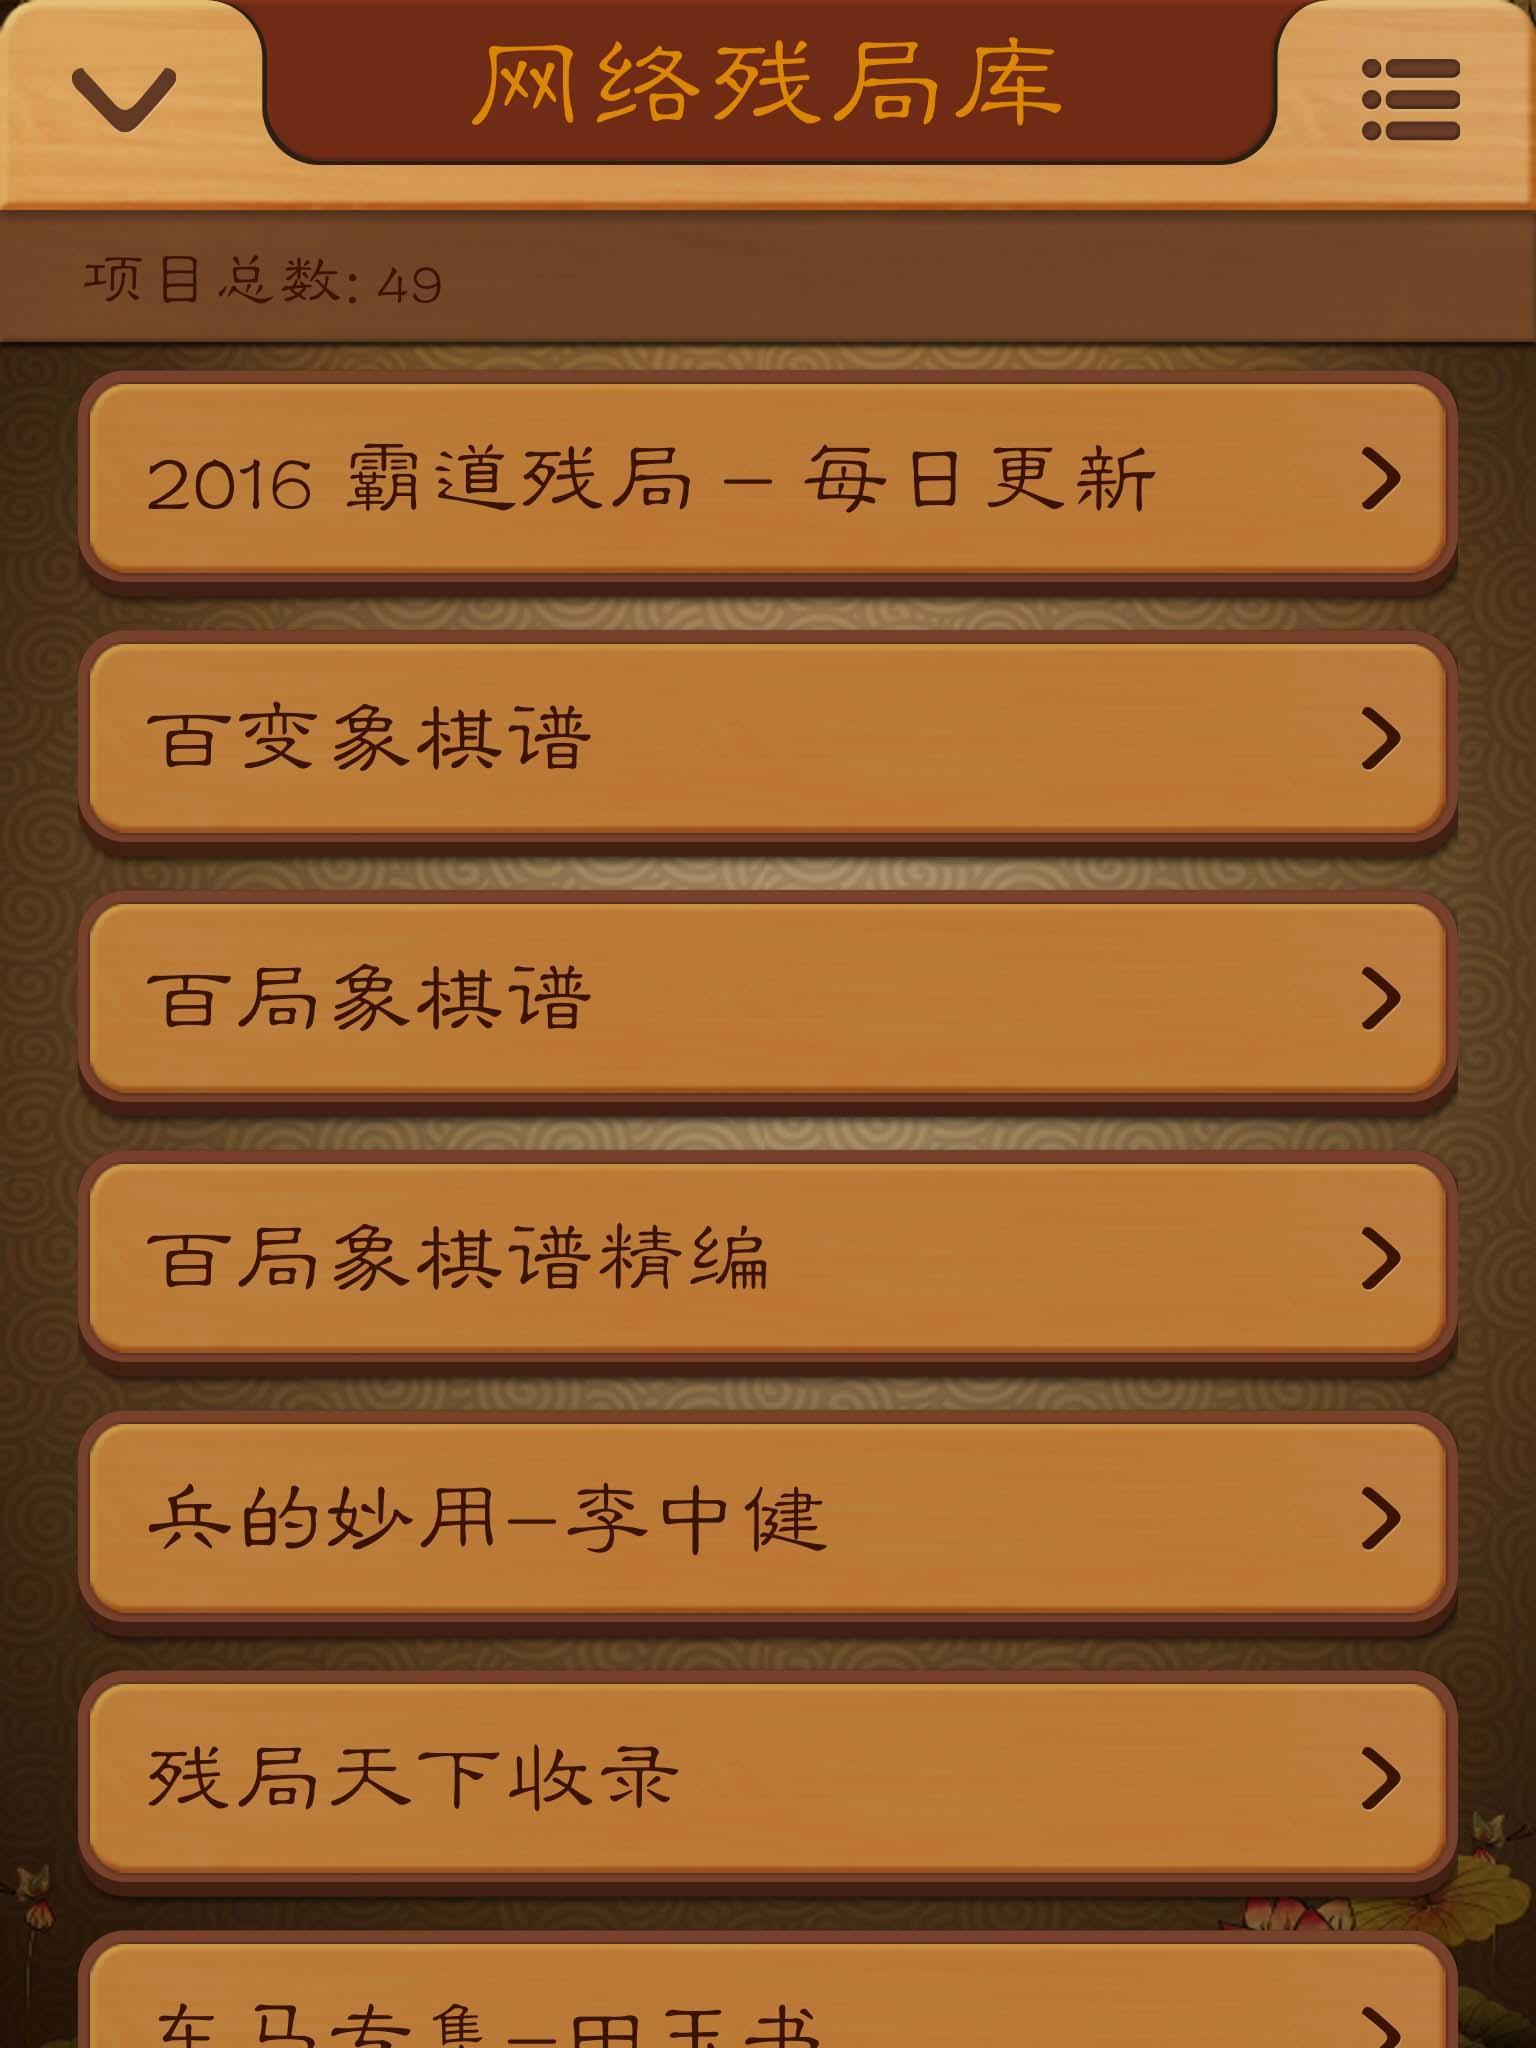 Chinese Chess, Xiangqi - many endgame and replay 3.9.6 Screenshot 10